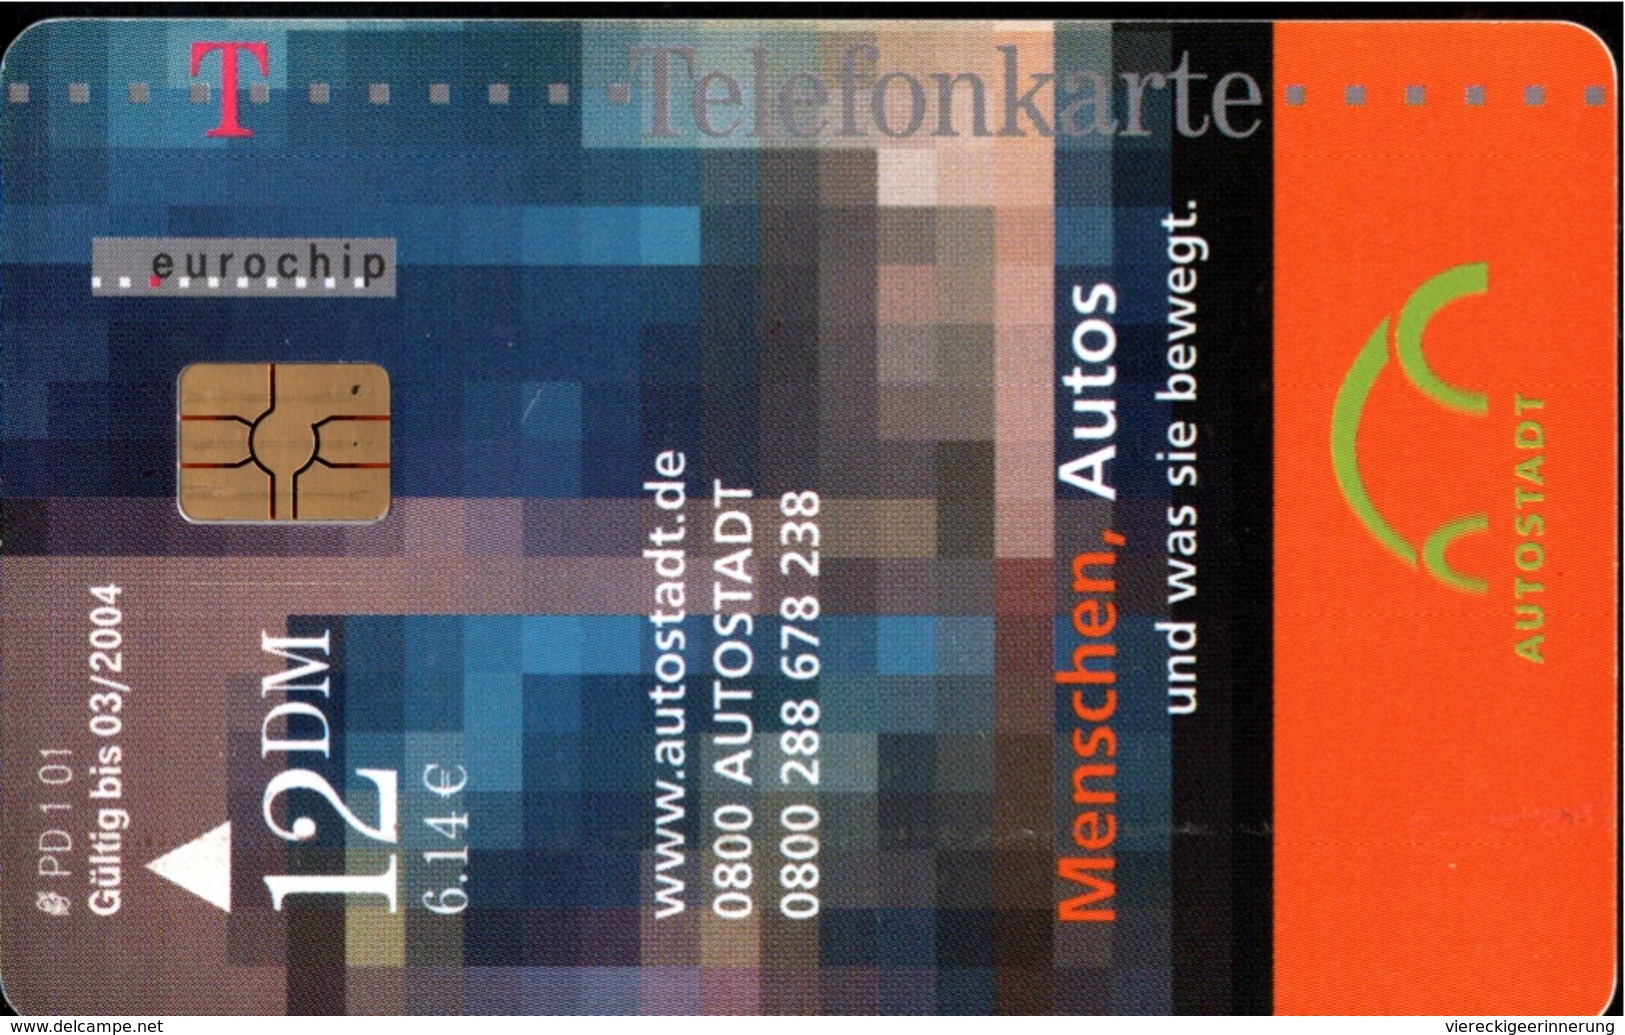 ! Telefonkarte, Telecarte, Phonecard, 2001, PD1, VW Autostadt, Wolfsburg, Germany - P & PD-Series: Schalterkarten Der Dt. Telekom